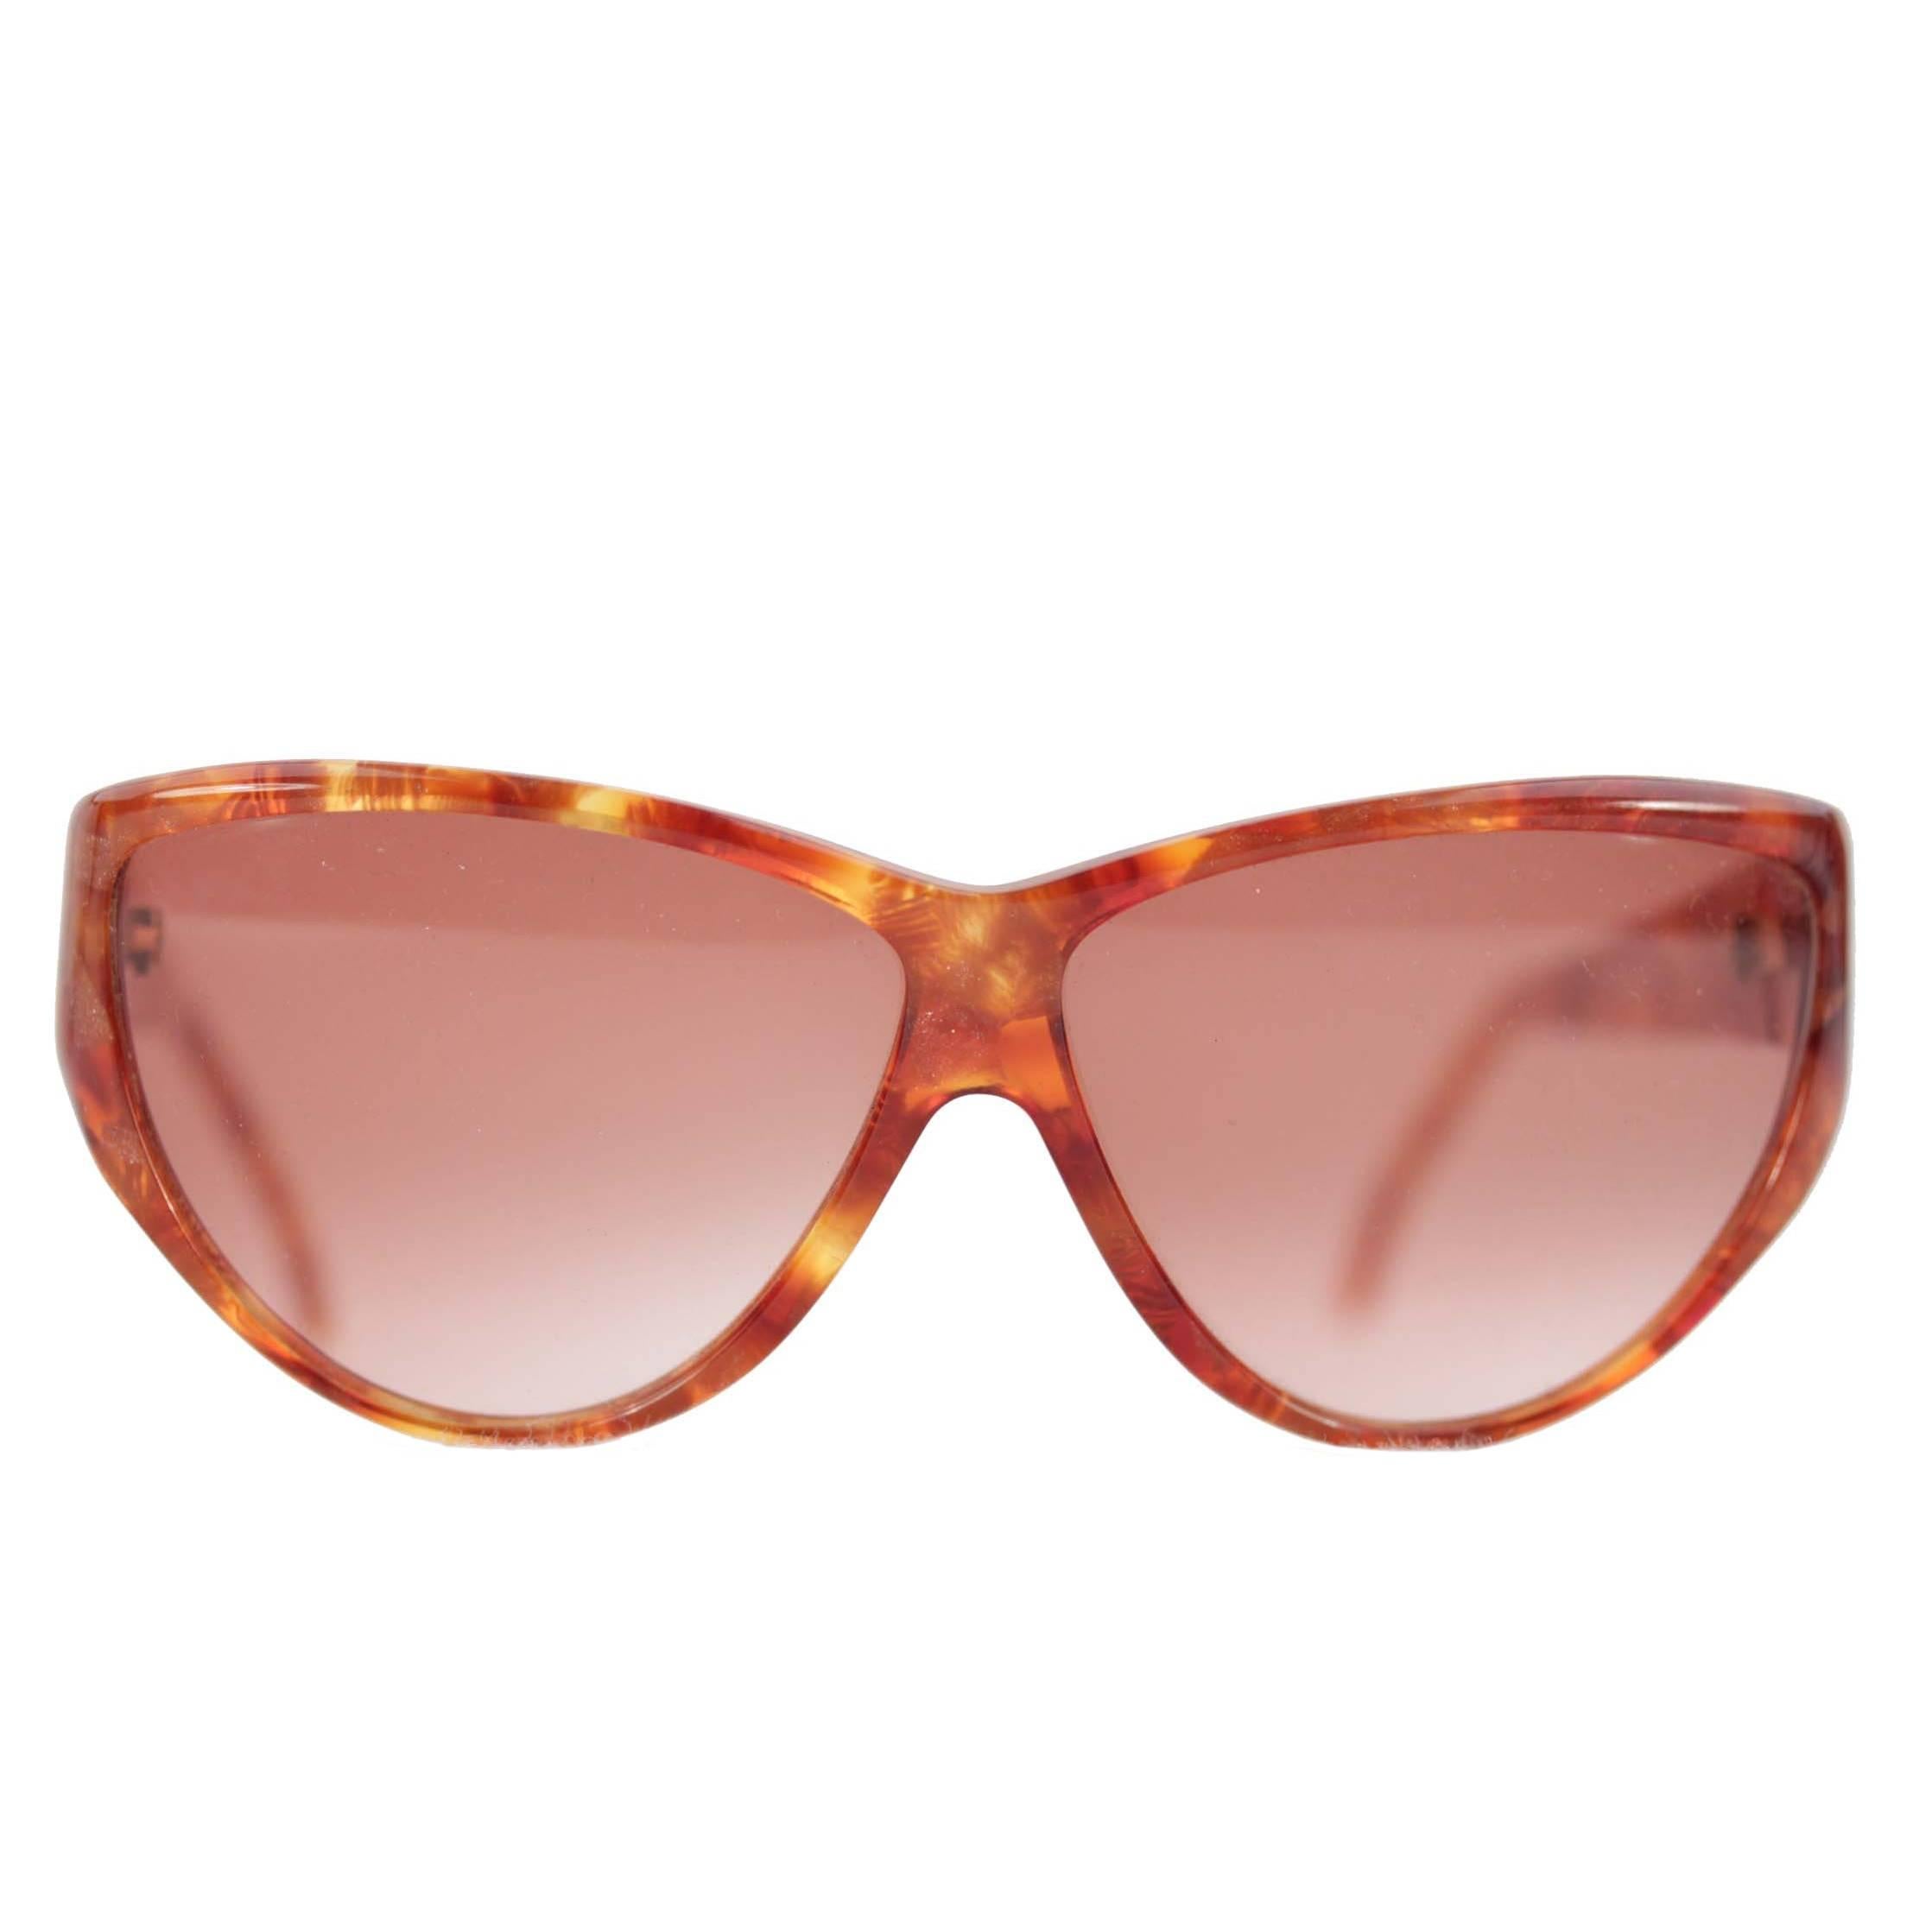 YVES SAINT LAURENT Vintage Sunglasses 8910 P130 Brown Frame France Eyewear